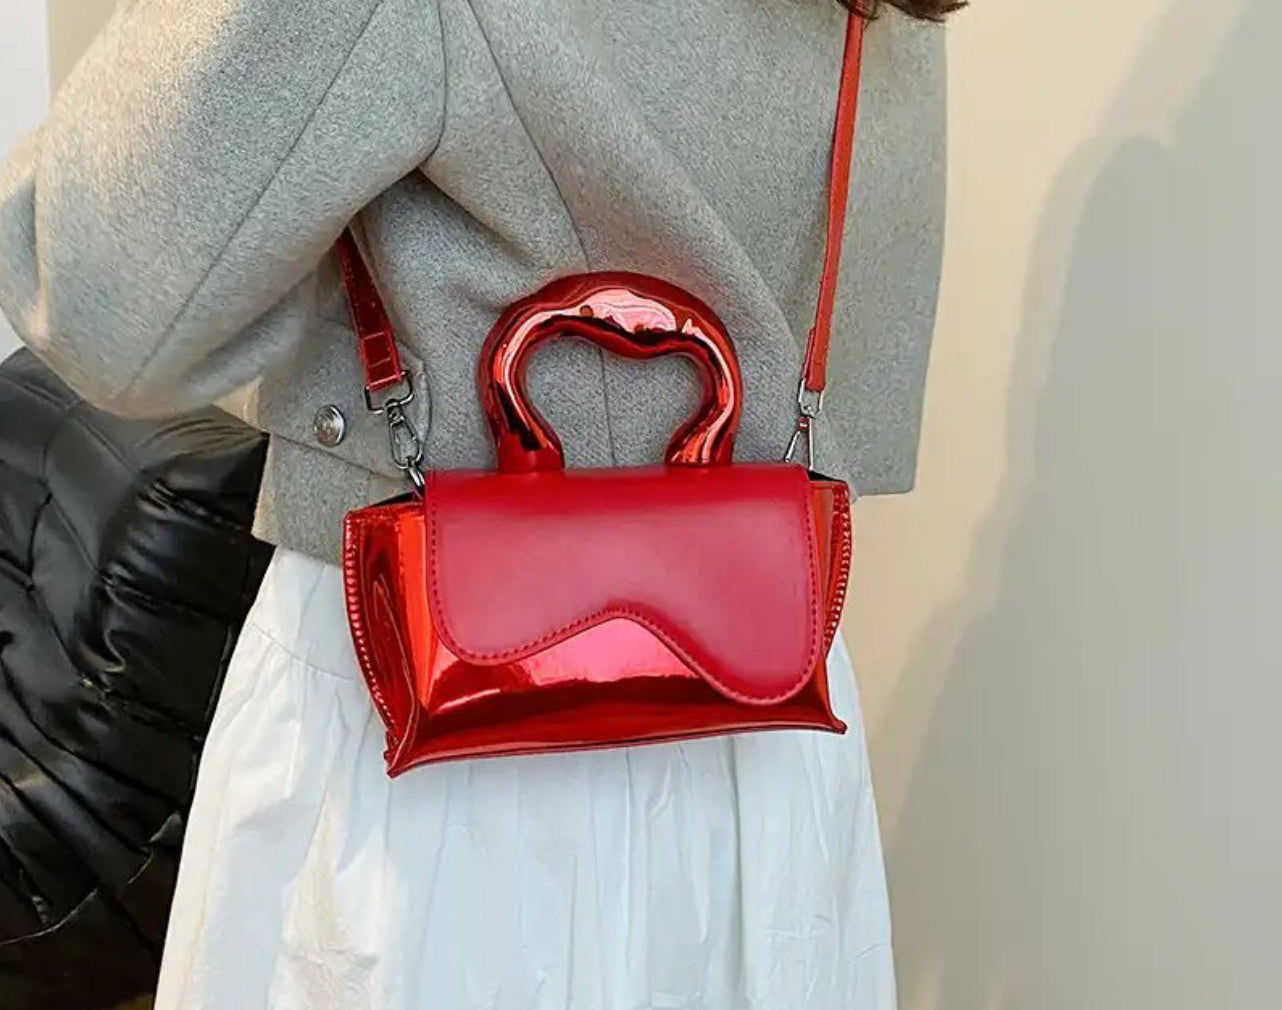 The Uniquely Designed Handbags